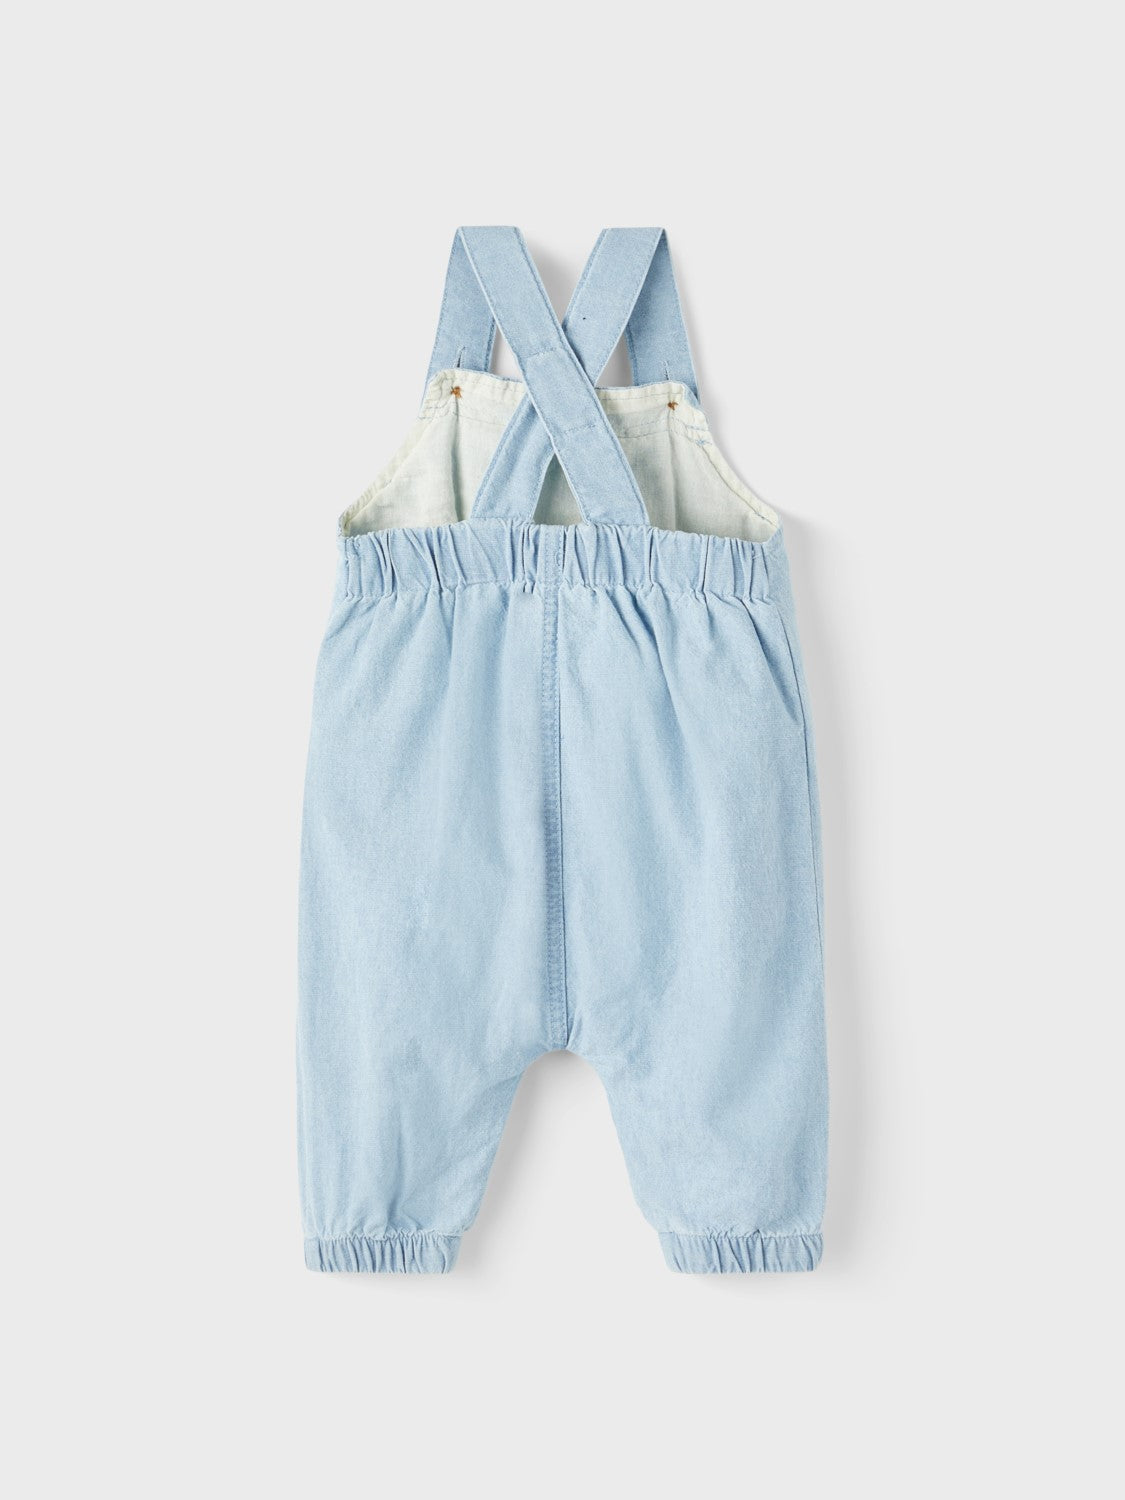 Soft denim overalls